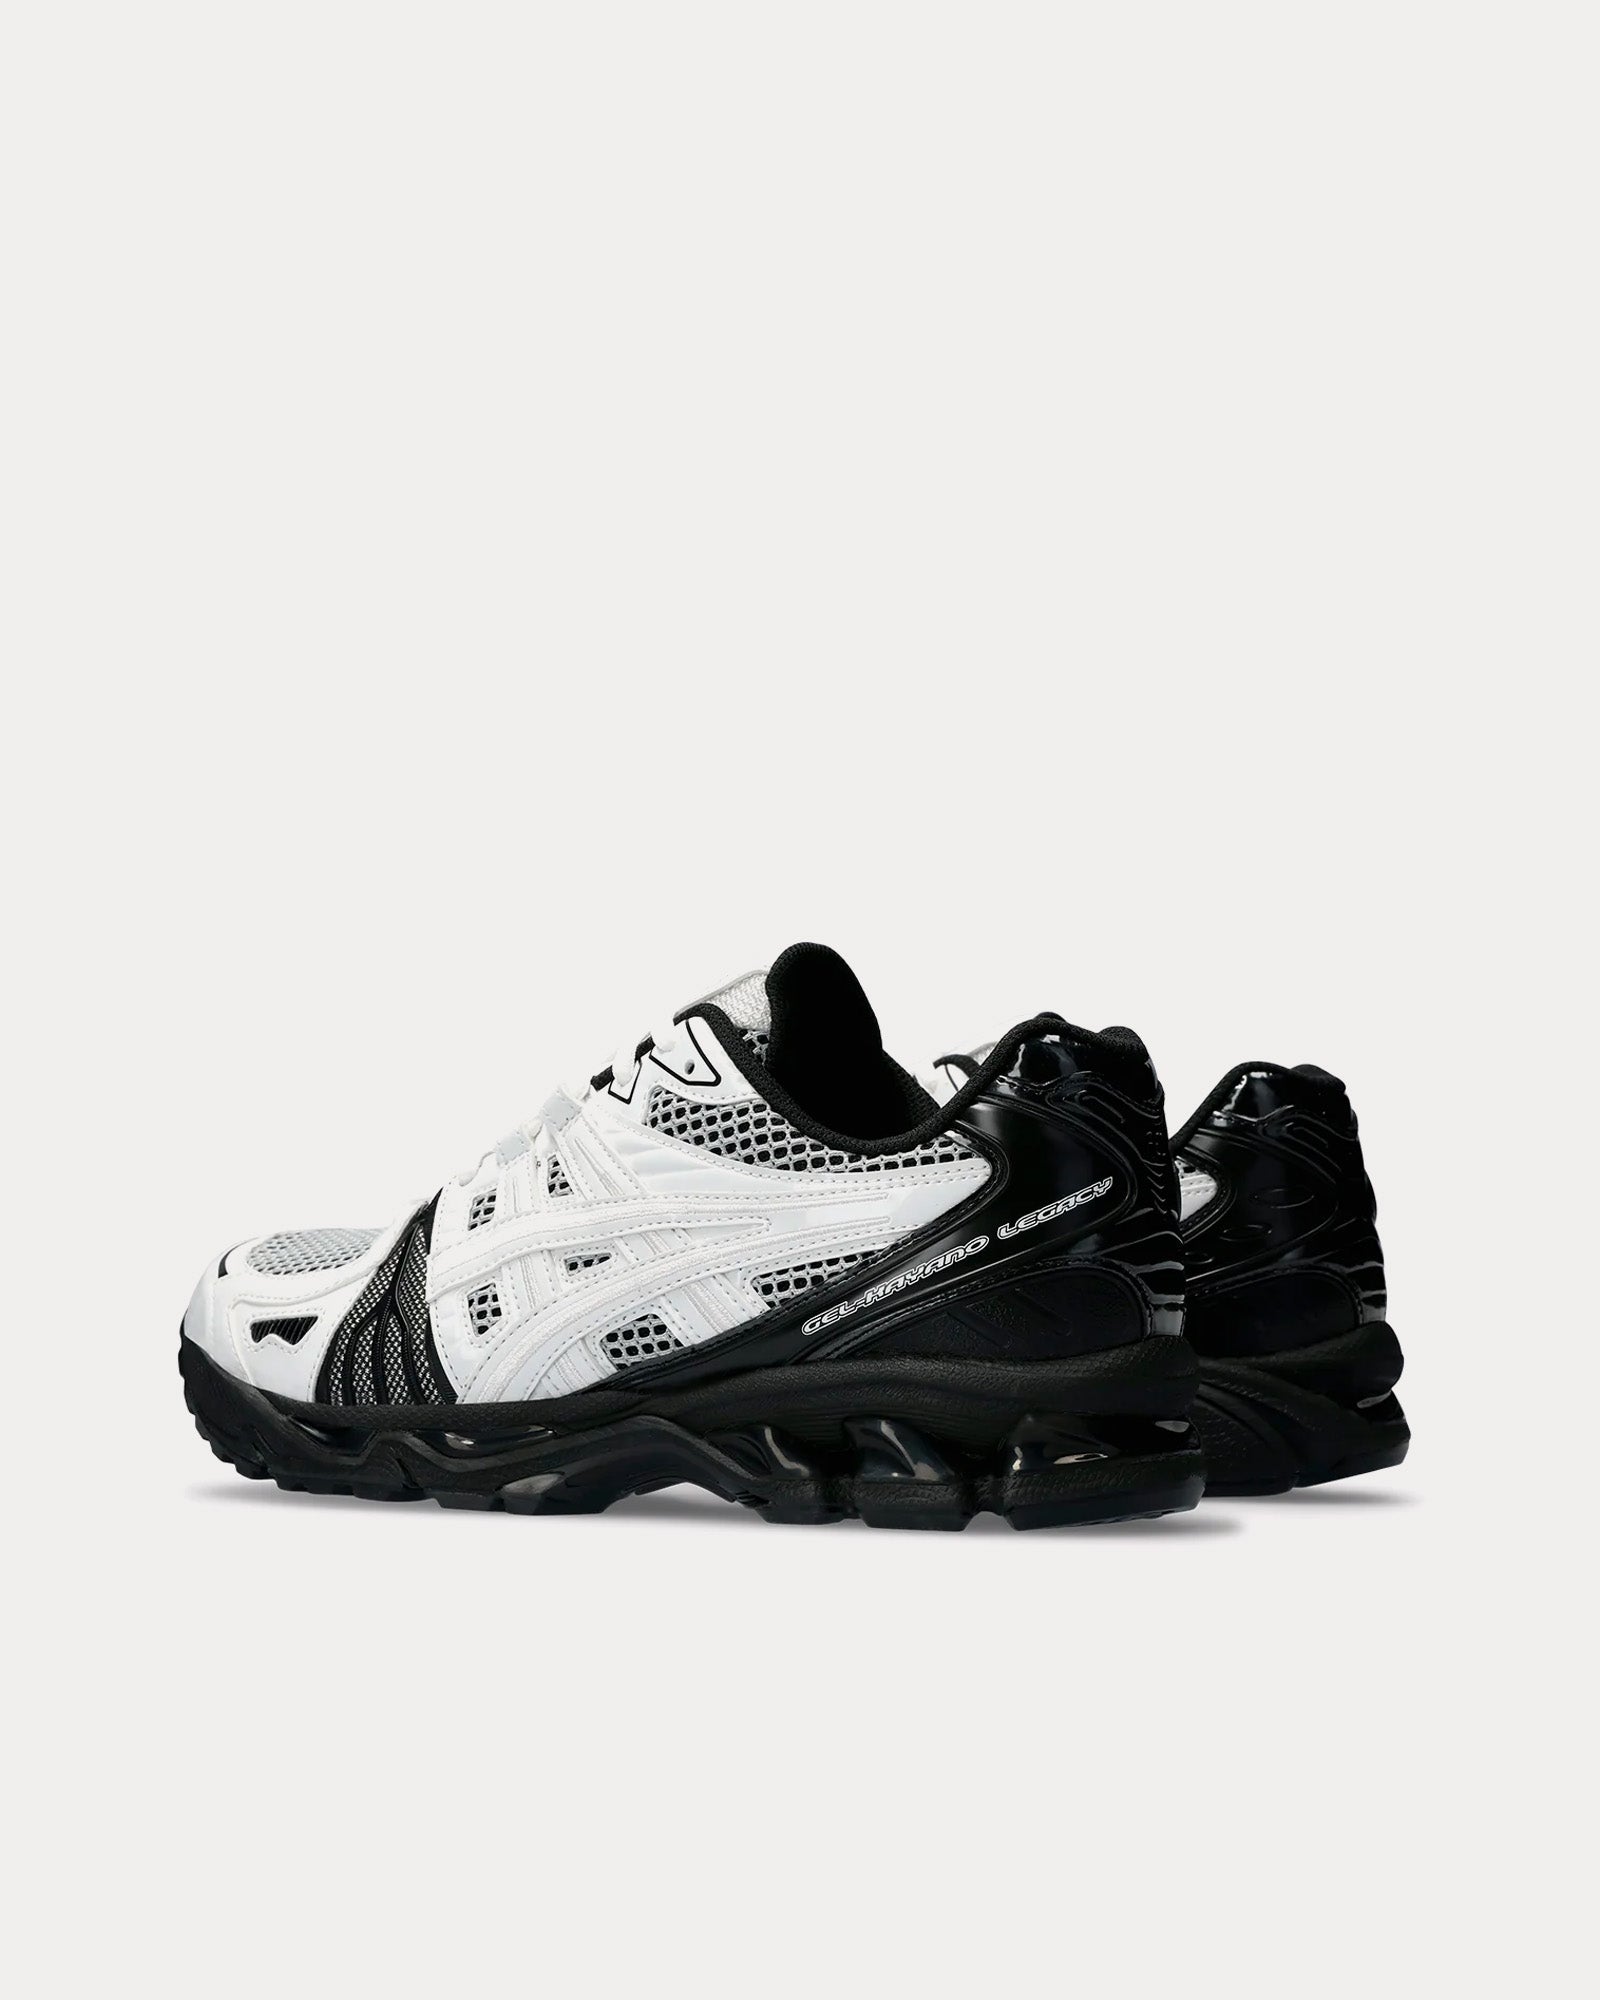 Asics x GmbH - Gel-Kayano Legacy White / Black Low Top Sneakers